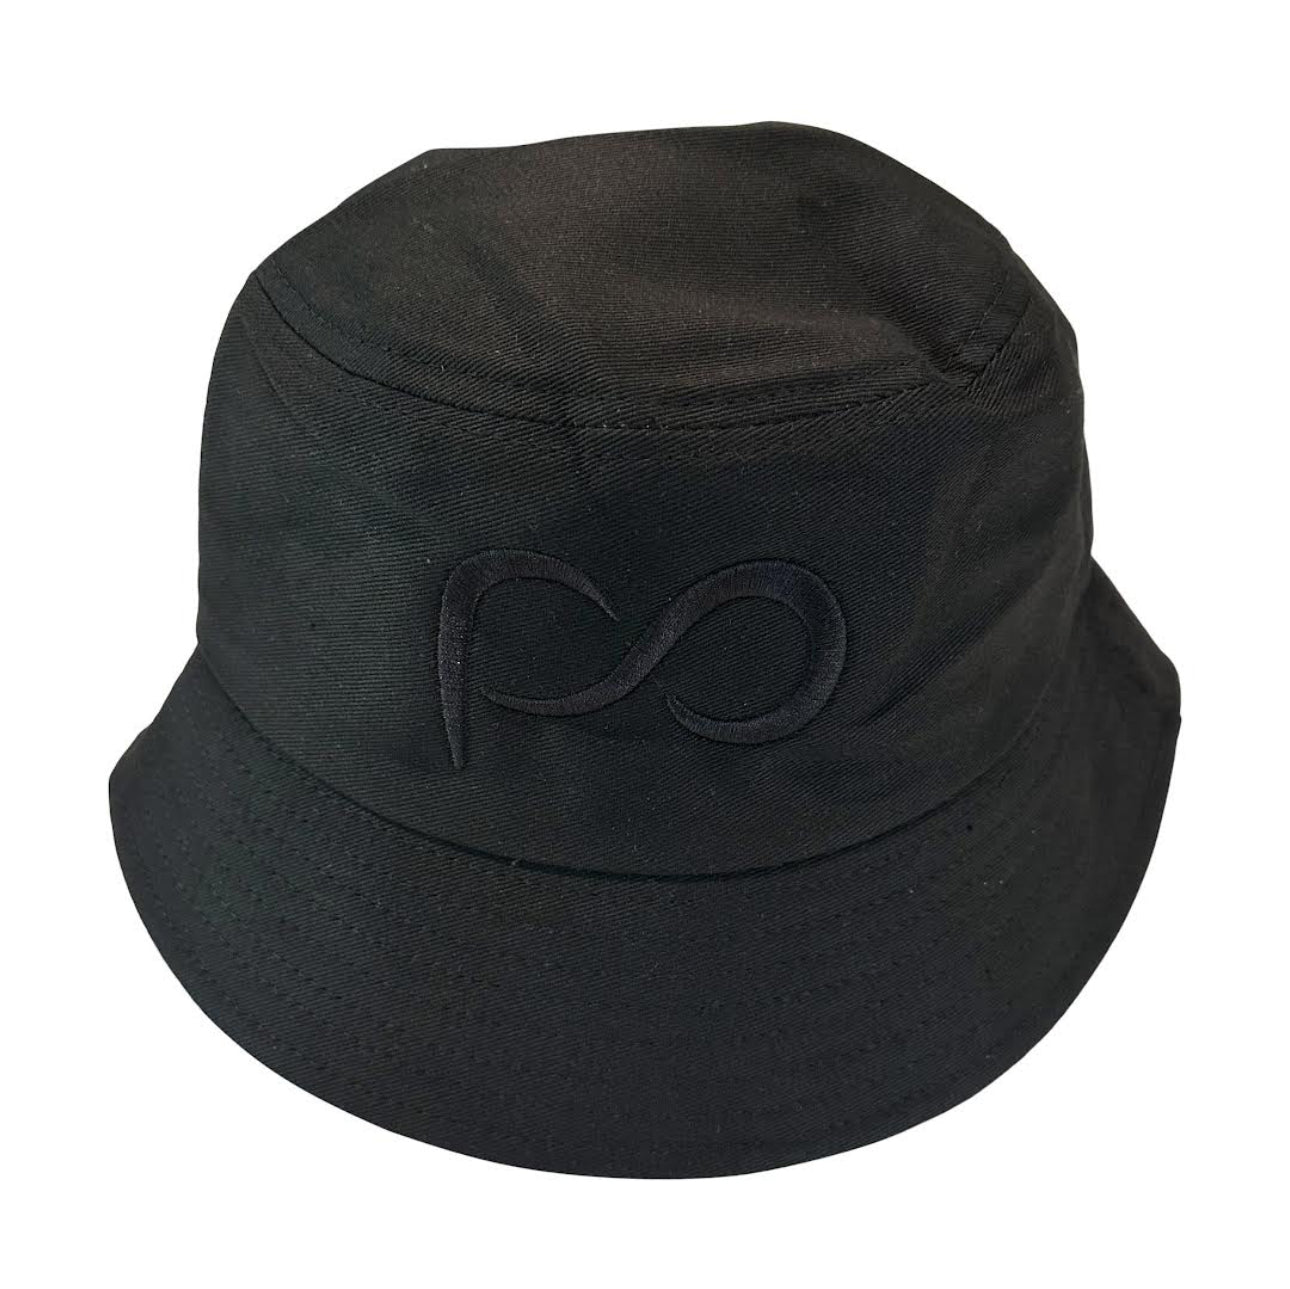 Black PO Bucket Hat with Black PO logo